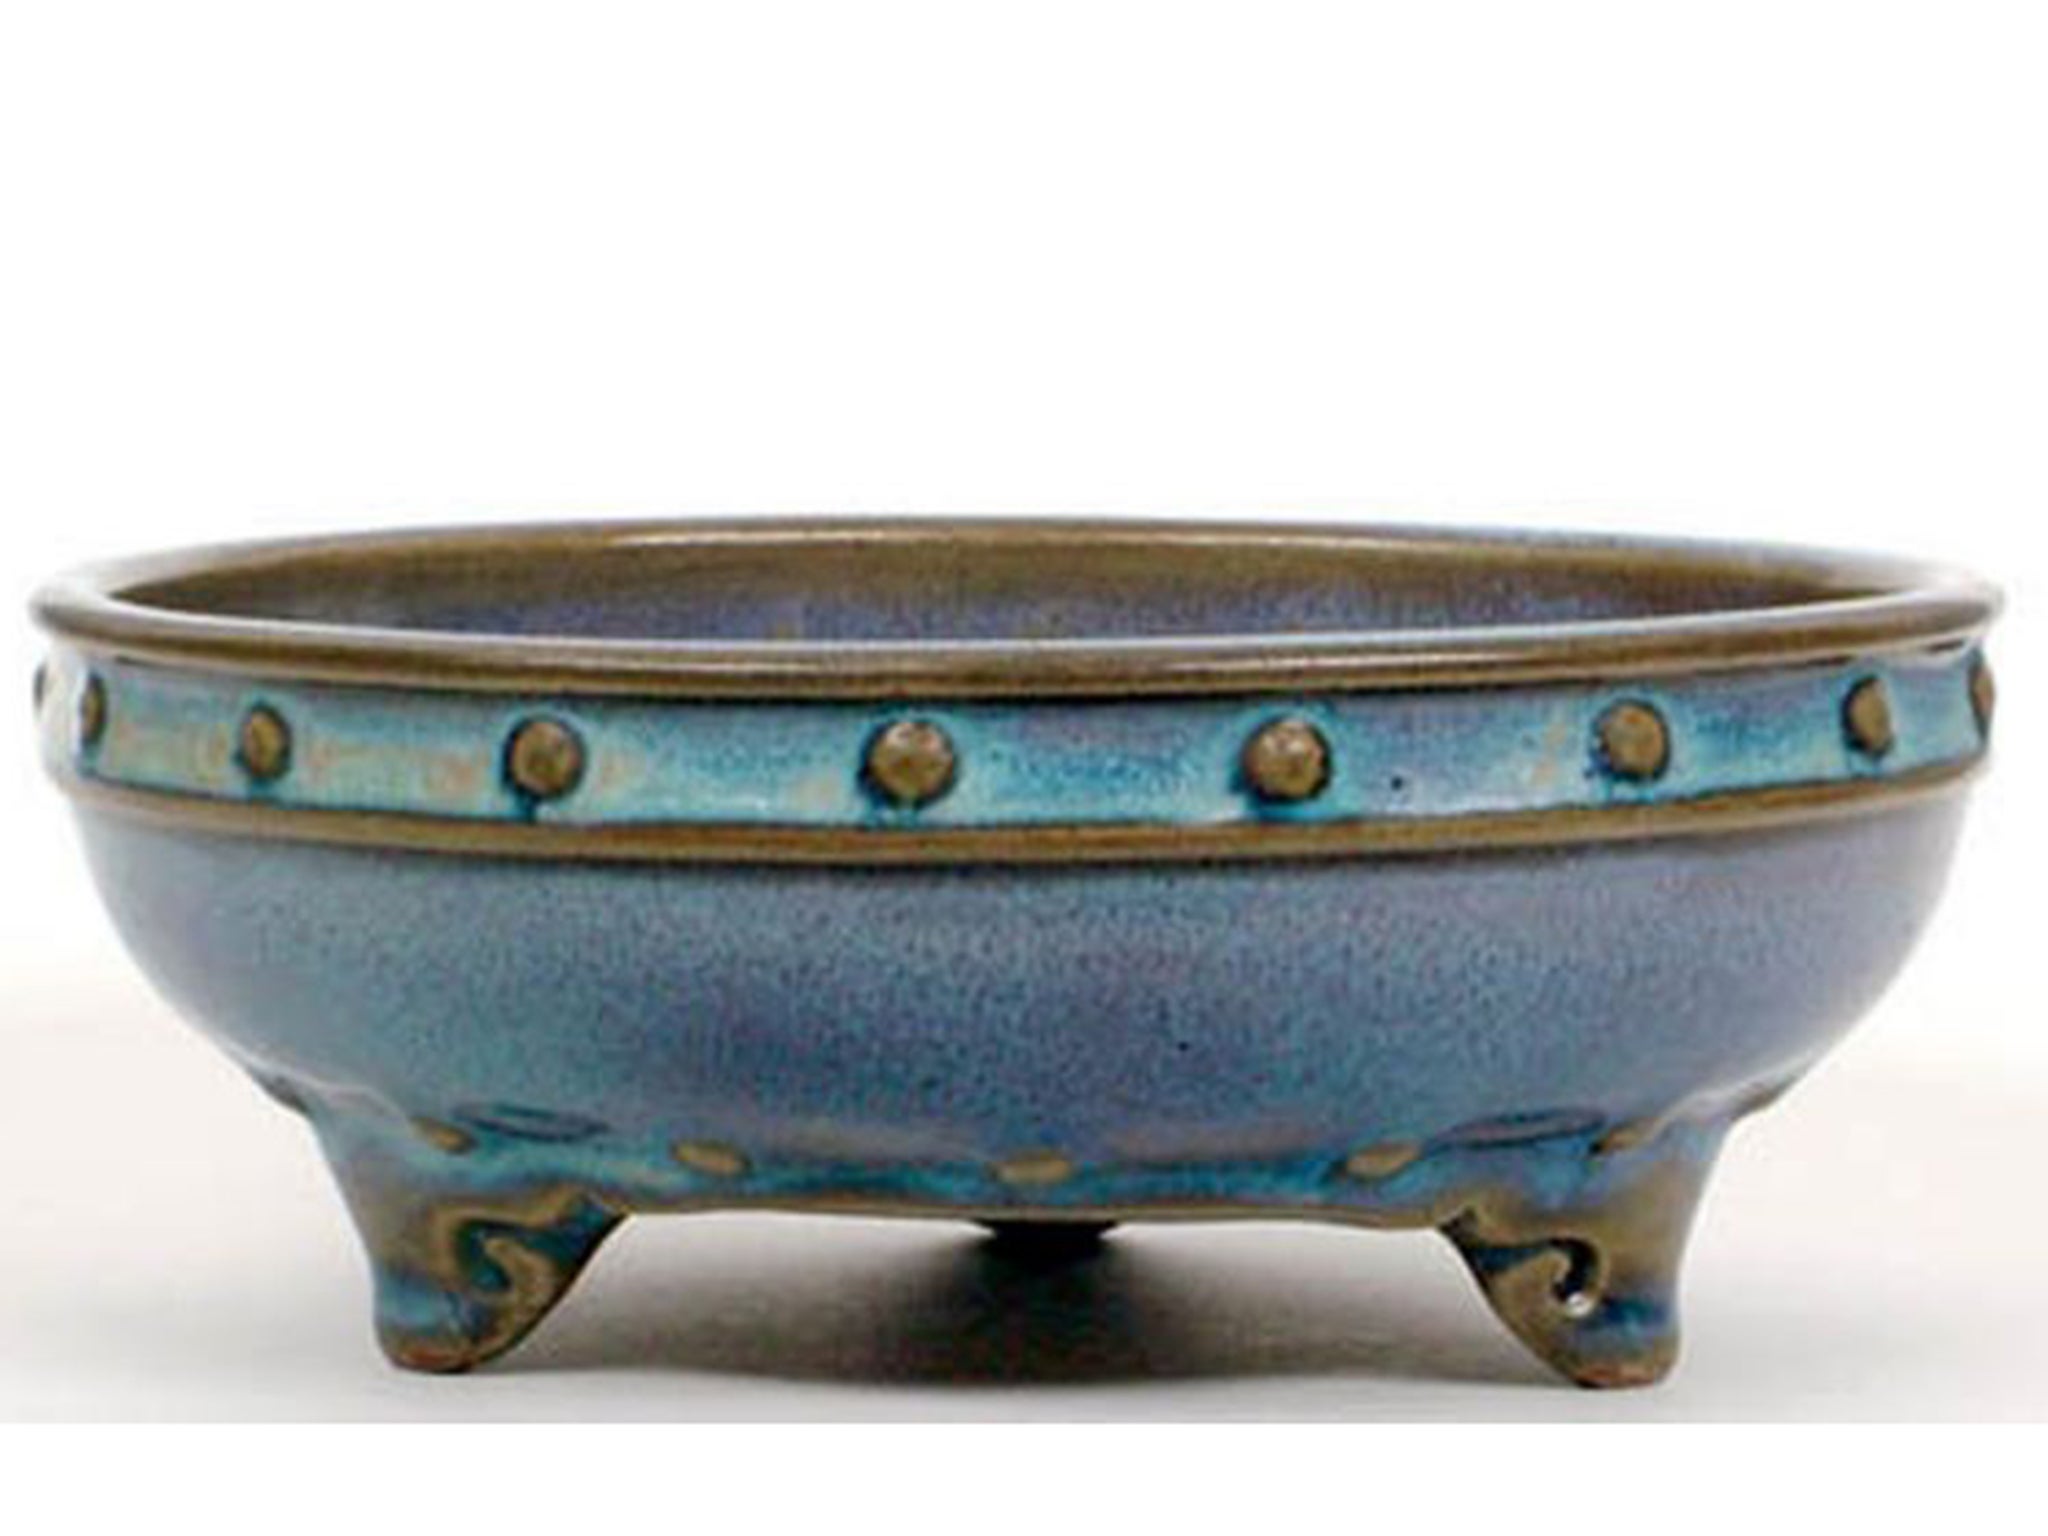 Chinese ceramics from Croydon